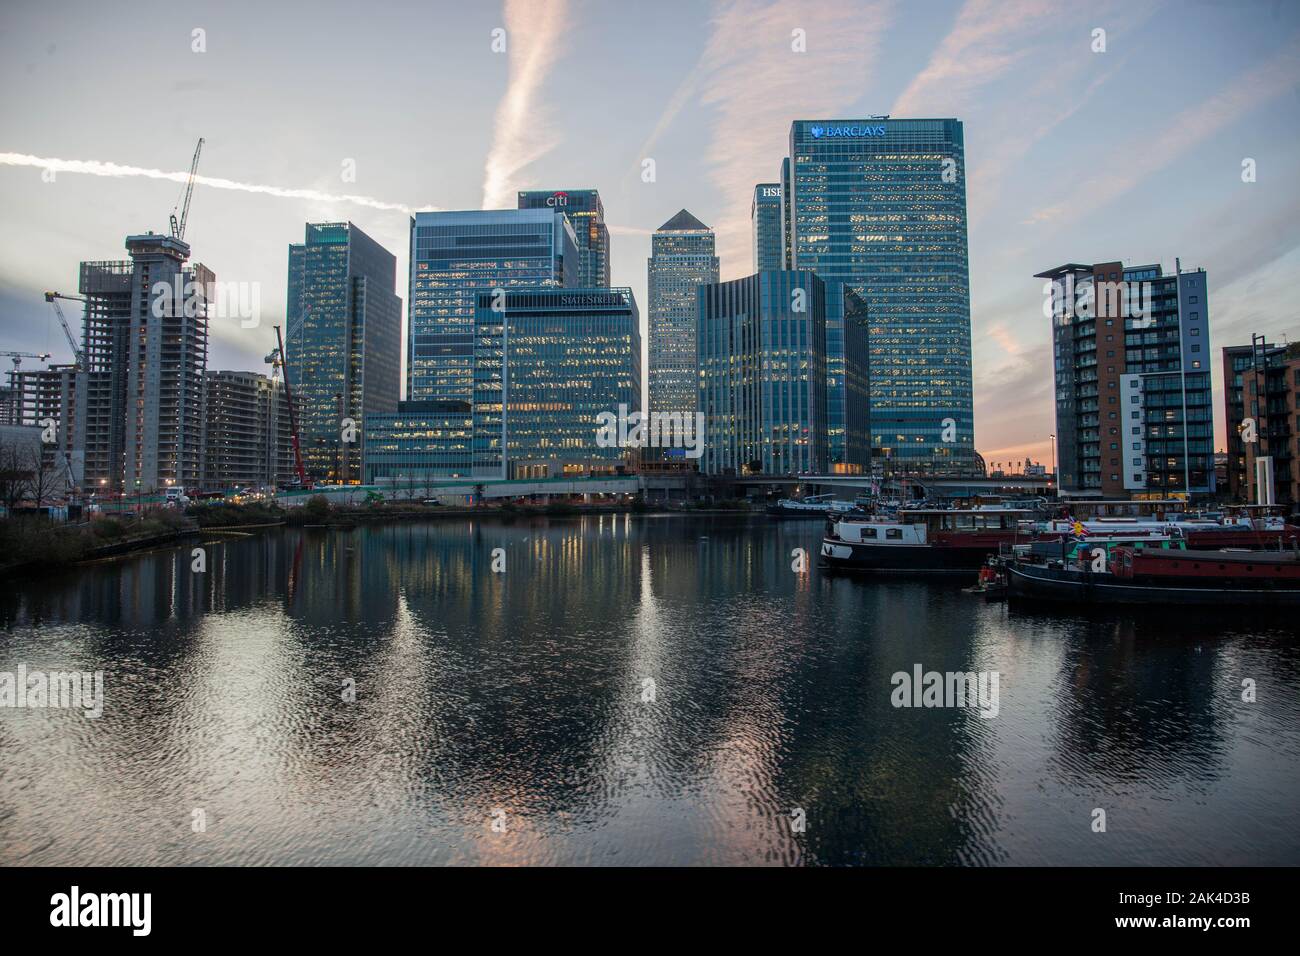 Canary Wharf, London Stock Photo - Alamy